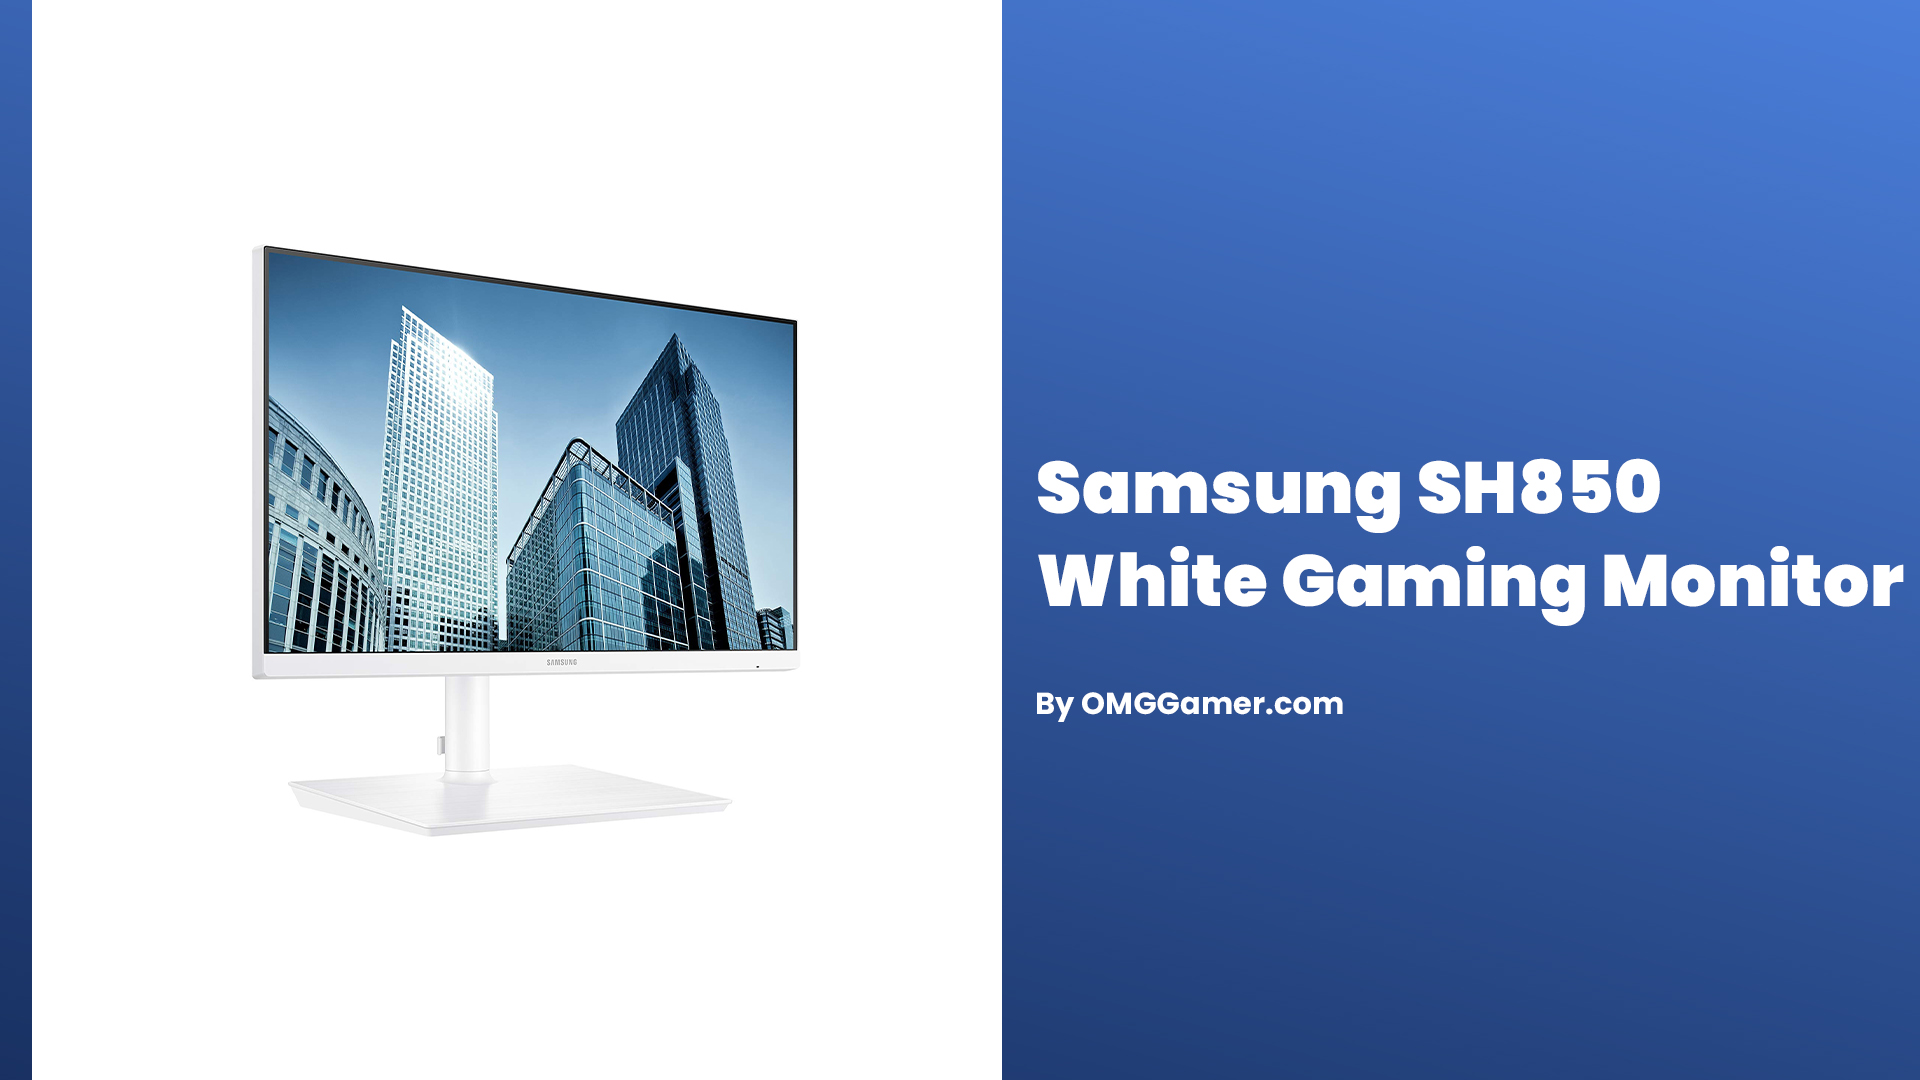 Samsung SH850 White Gaming Monitor